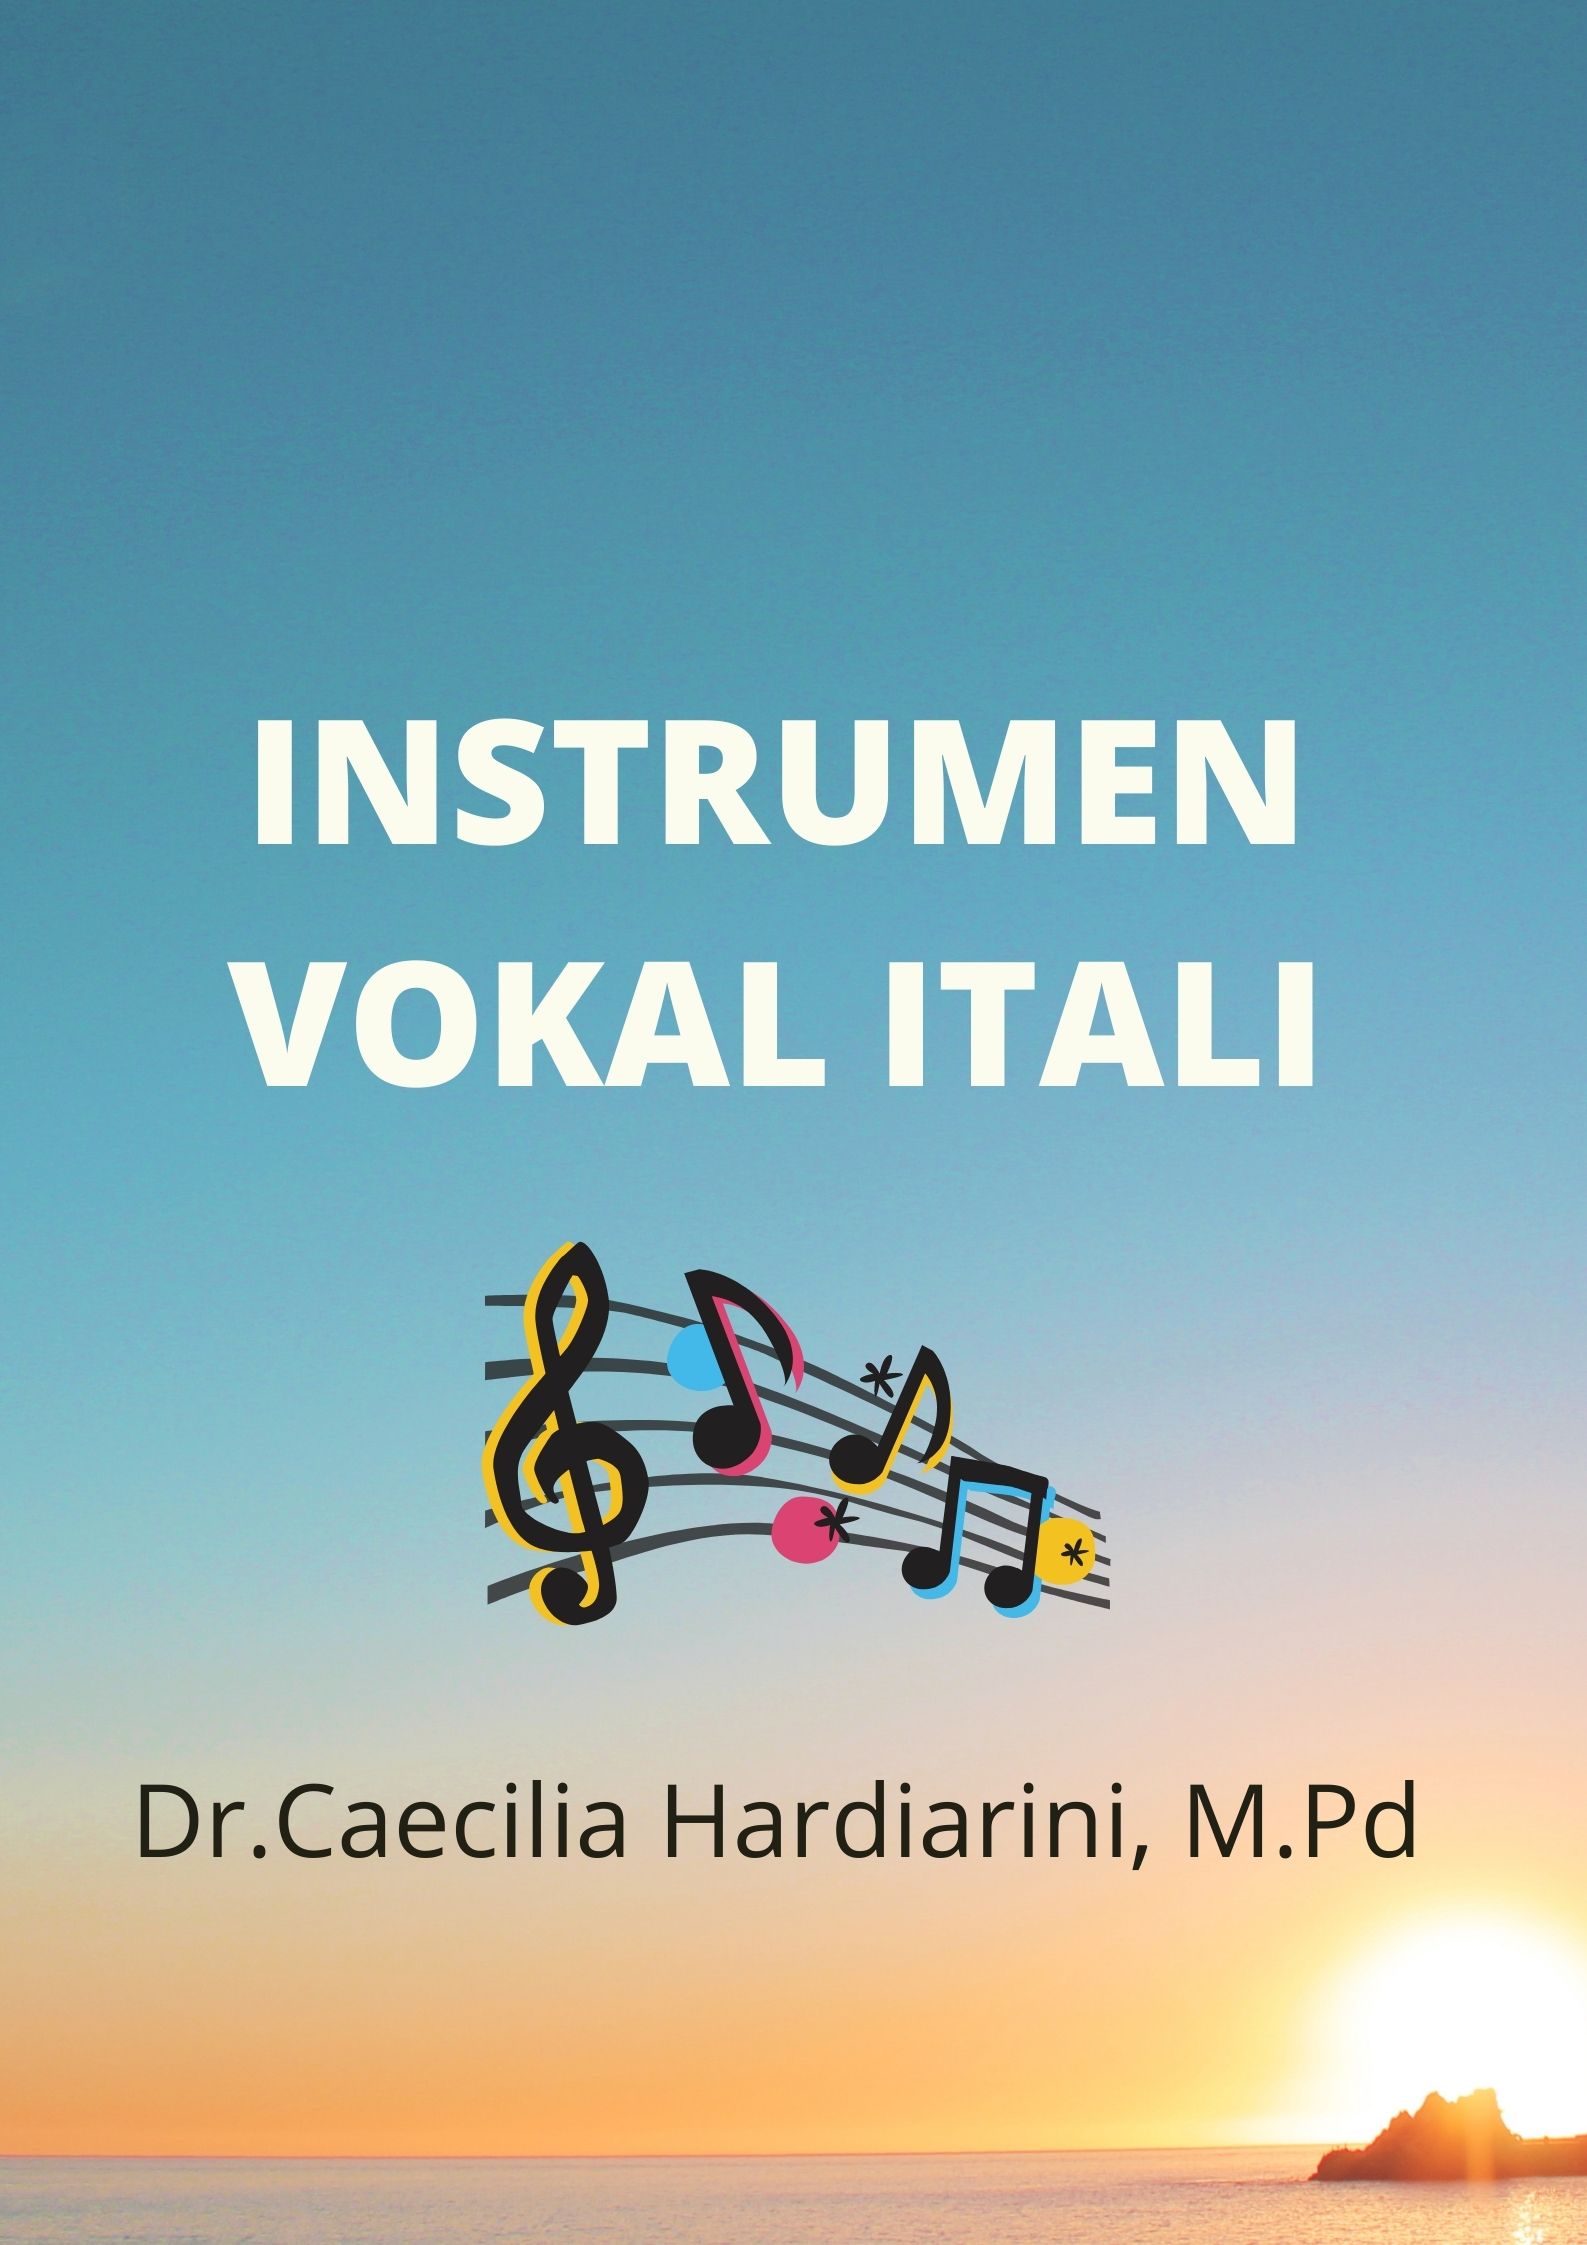 Instrumen Vokal Itali (Caecilia Hardiarini)